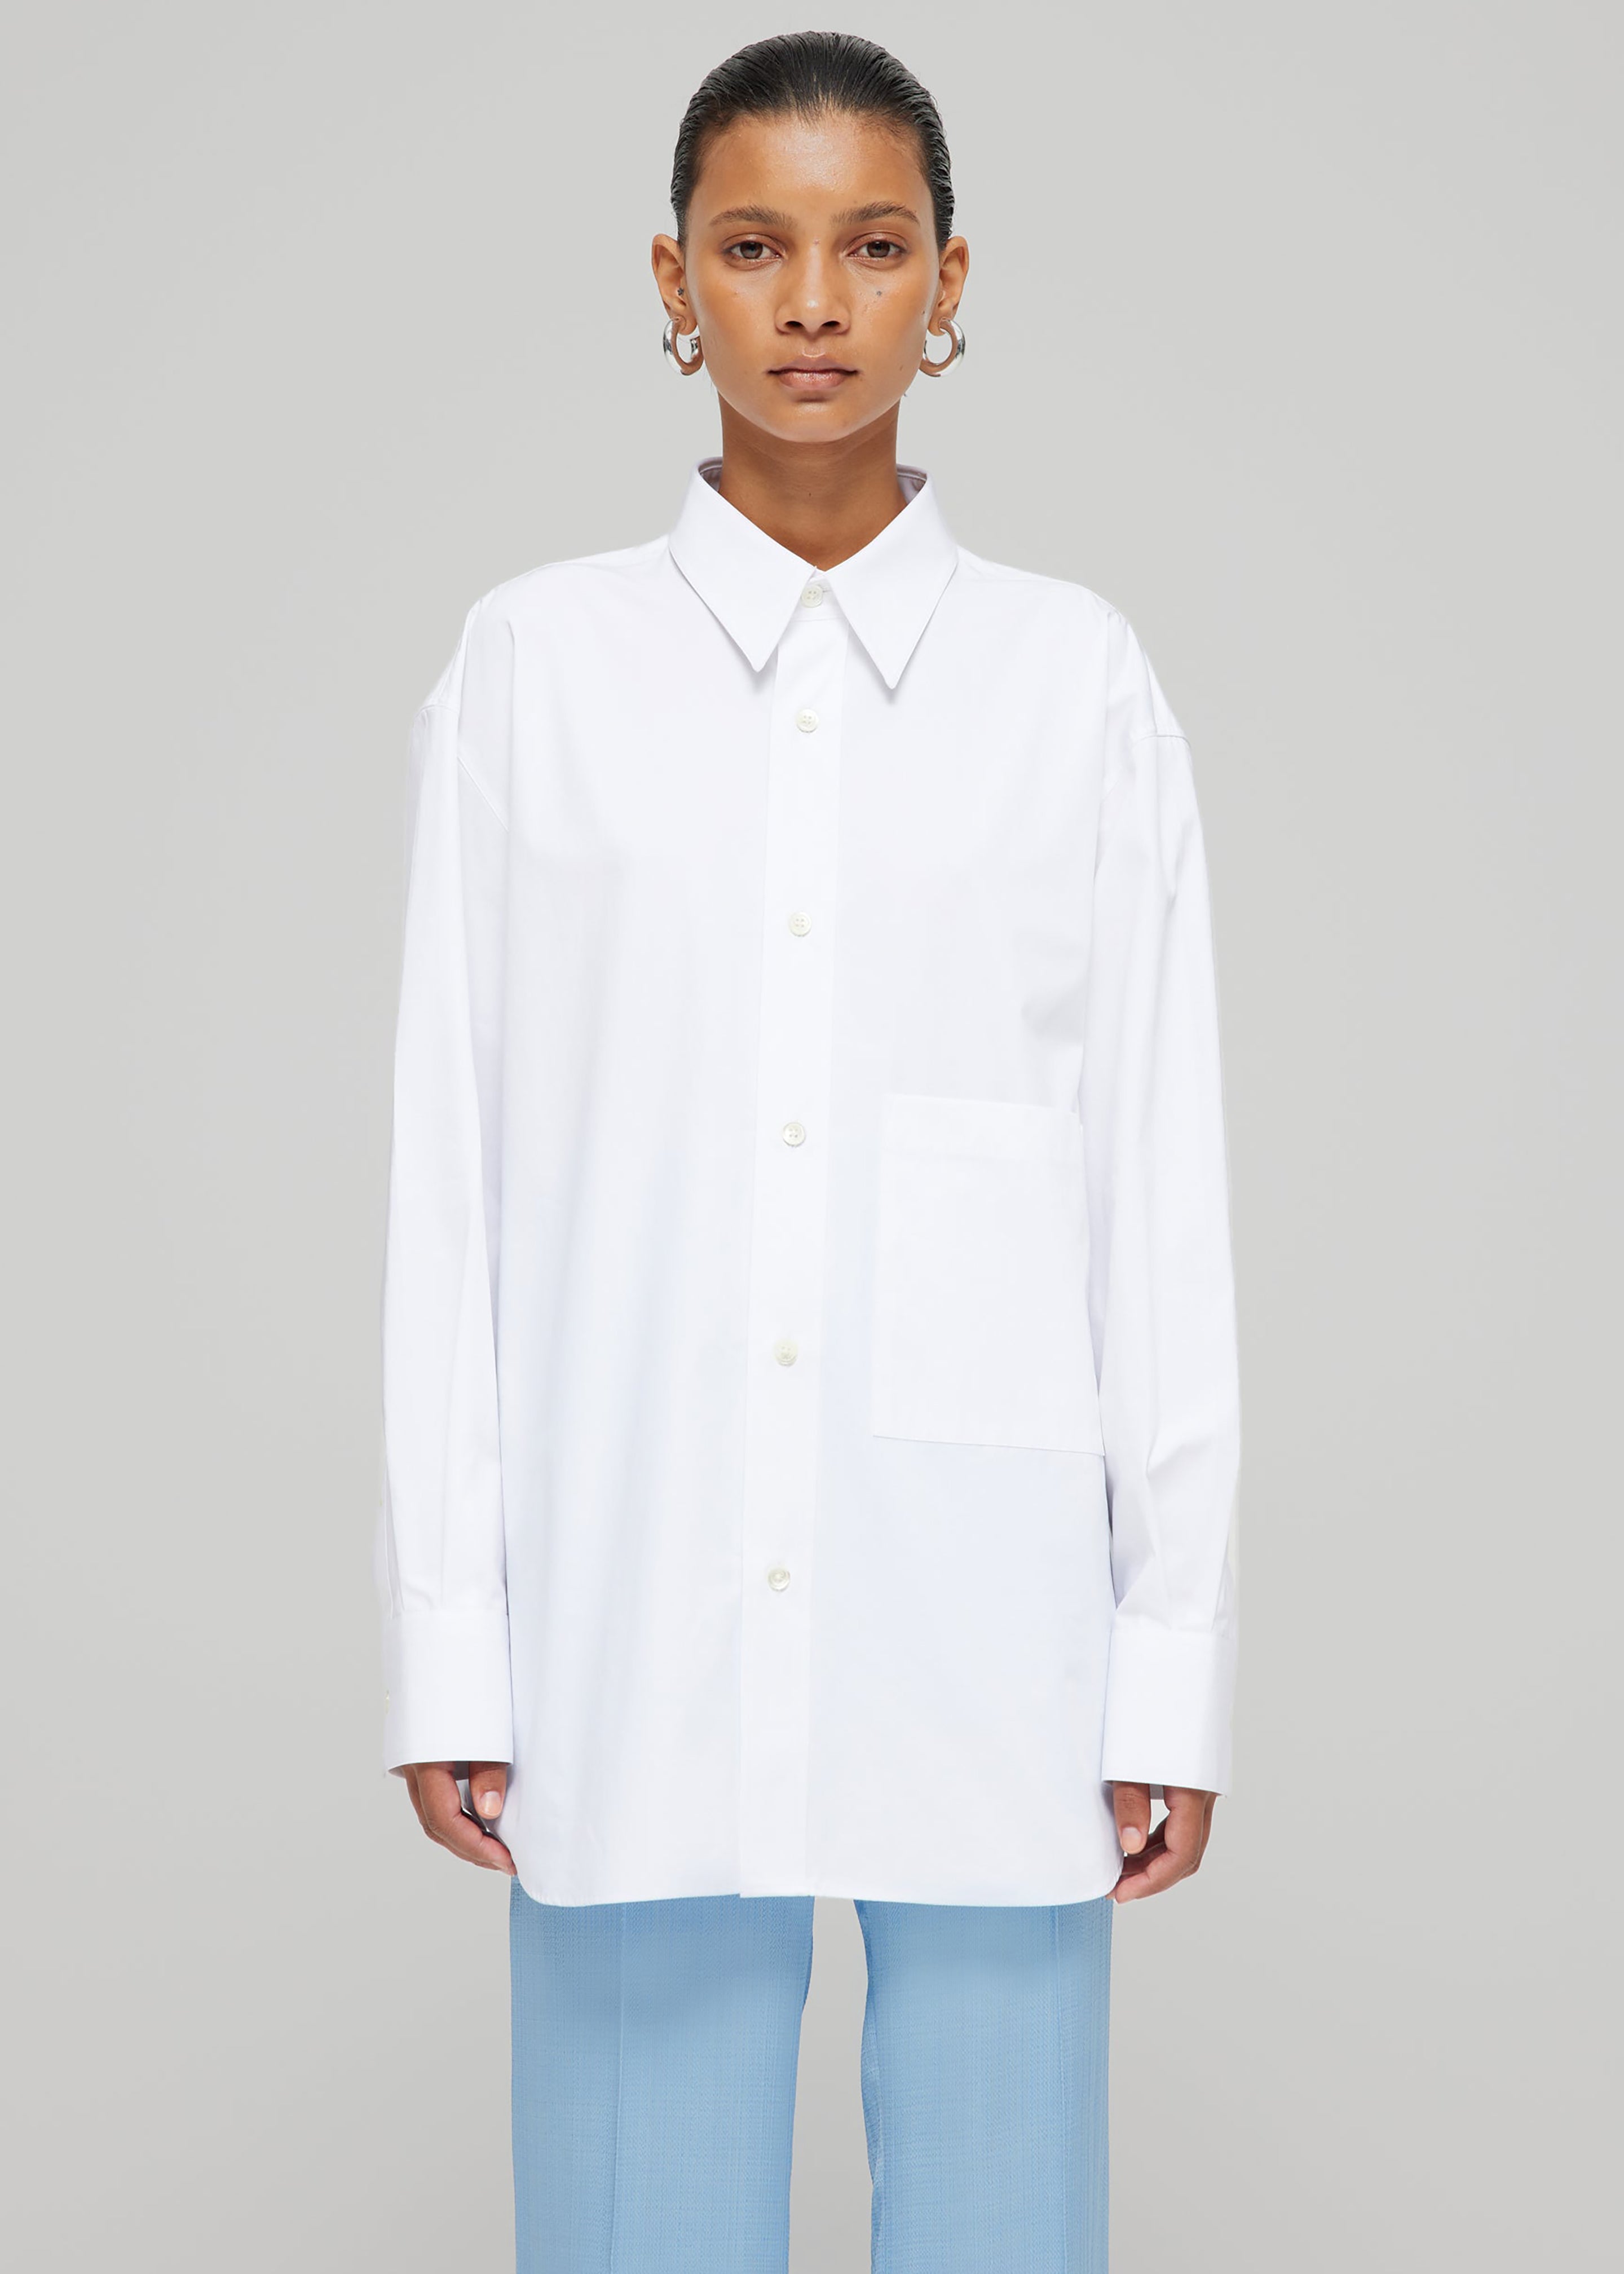 Róhe Unisex Classic Shirt - White - 3